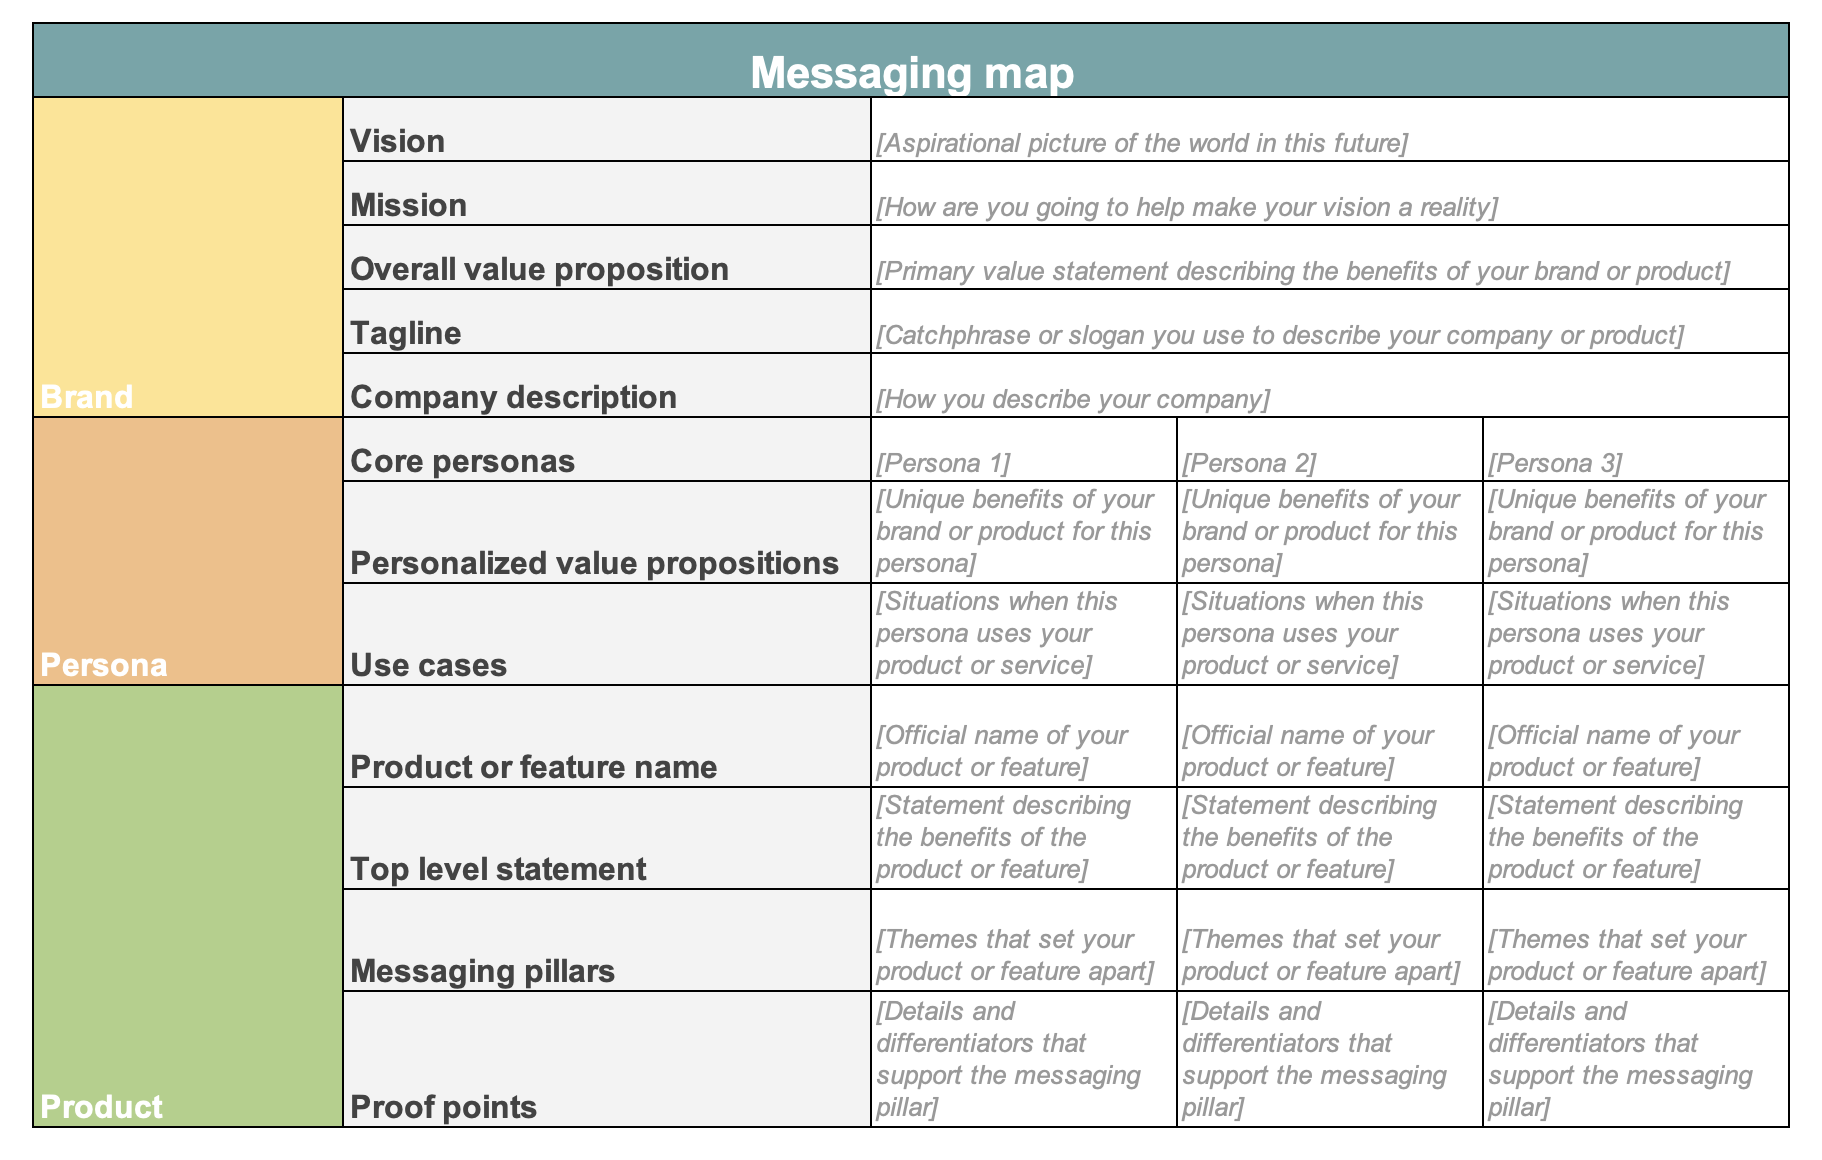 Messaging map